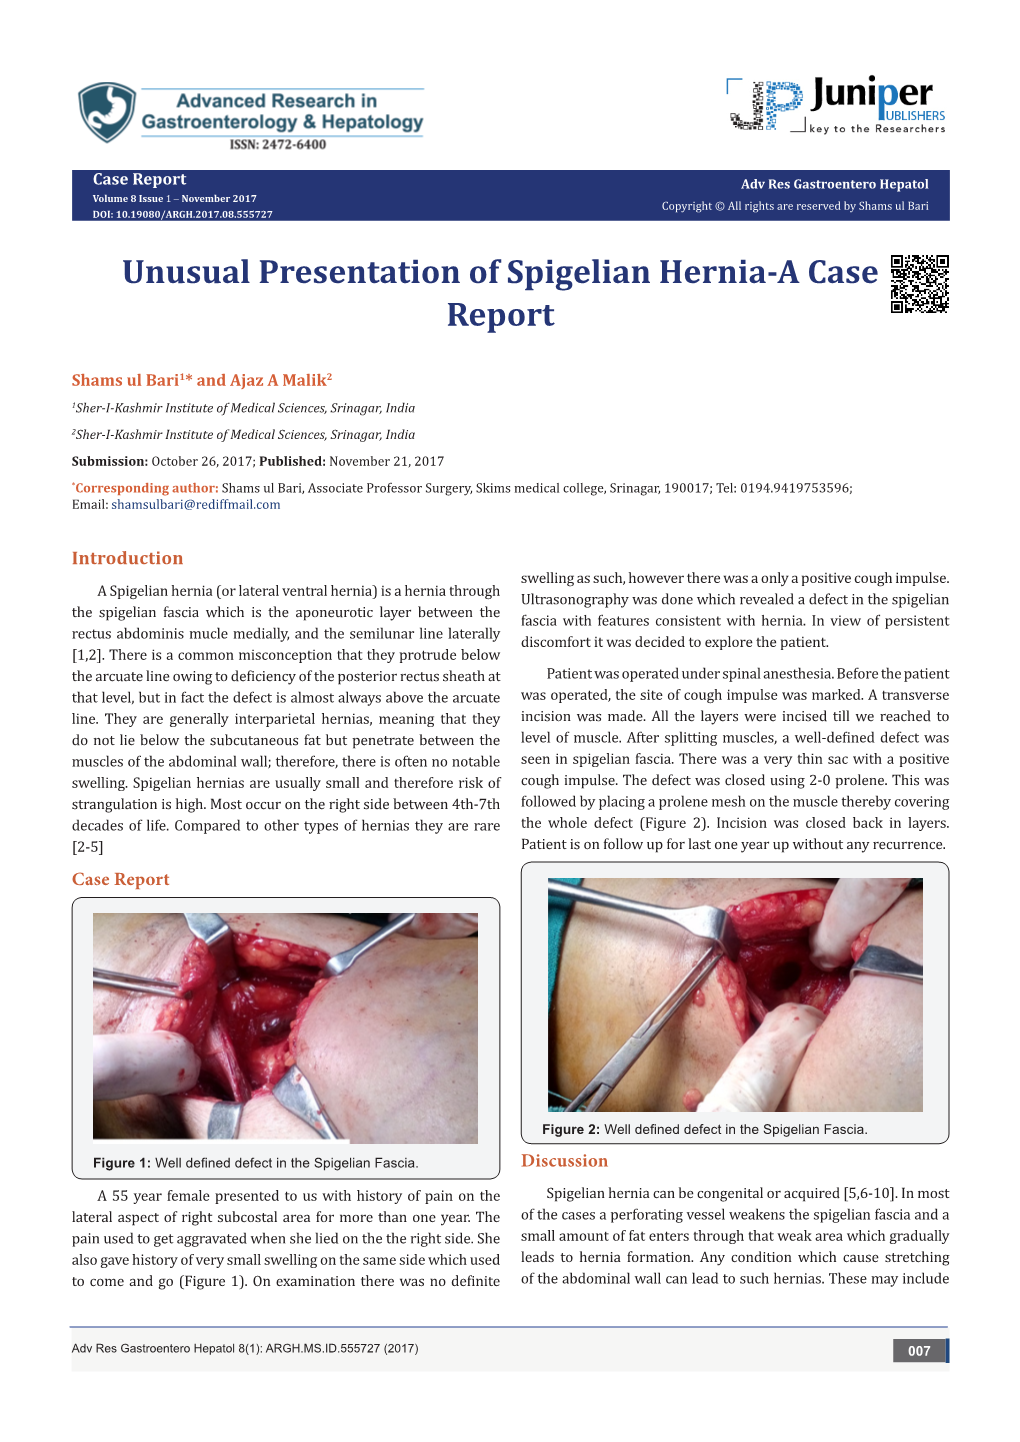 Unusual Presentation of Spigelian Hernia-A Case Report